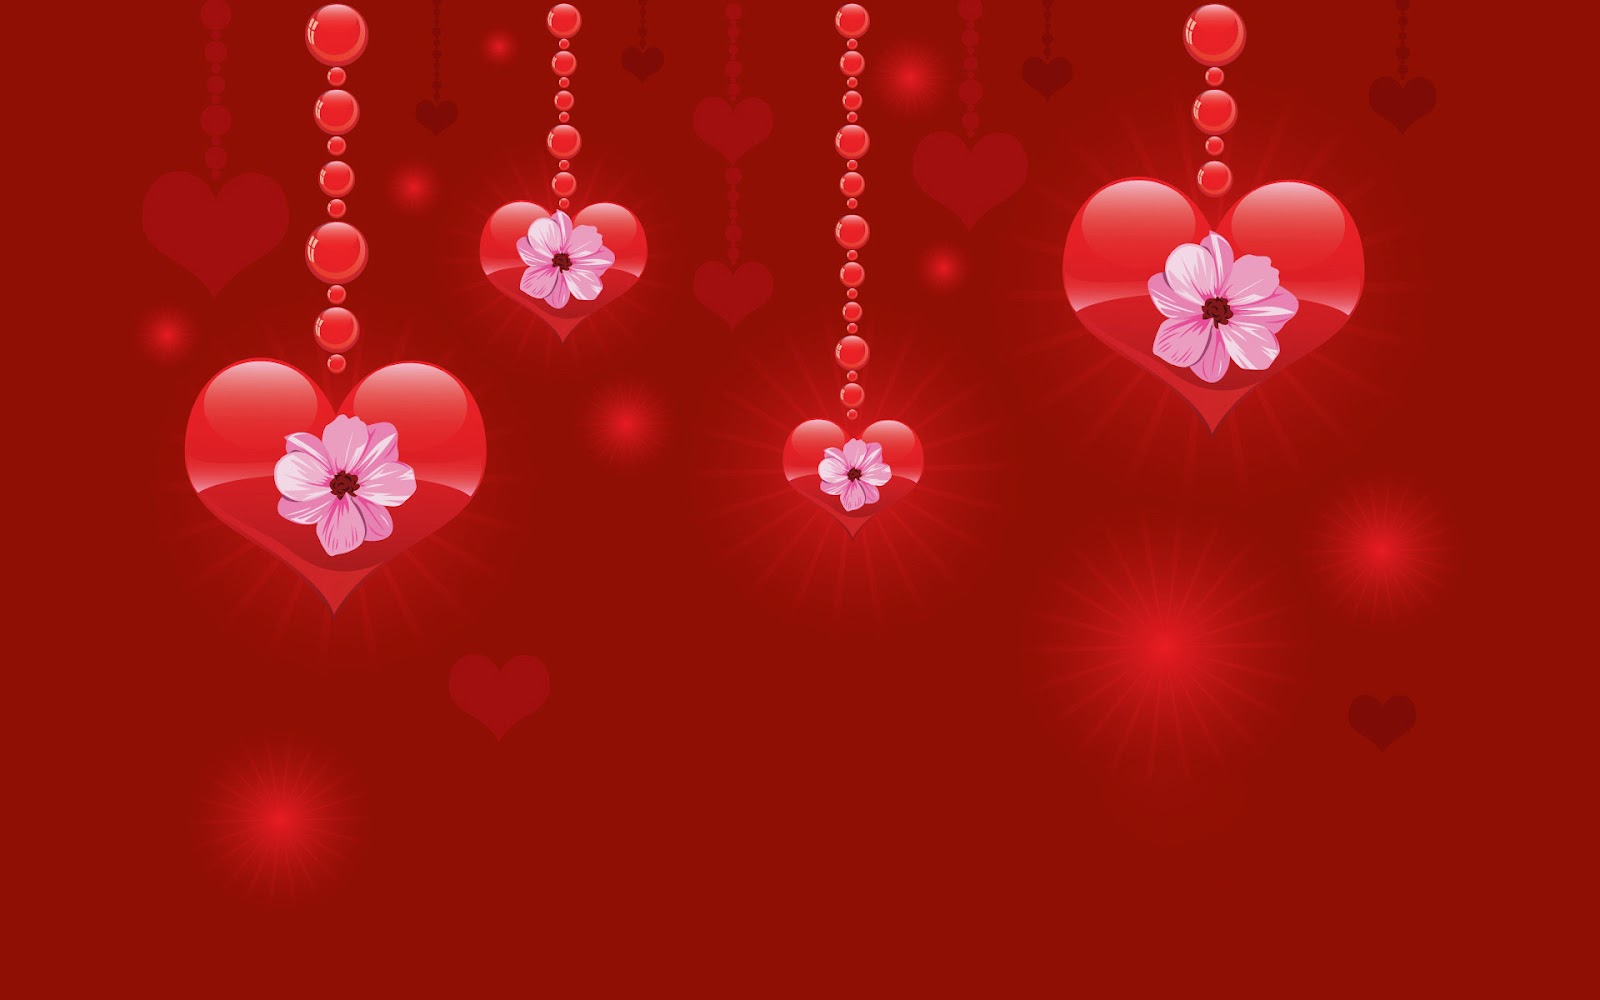 Valentines Day Wallpapers 2013   2014 ImageBankbiz